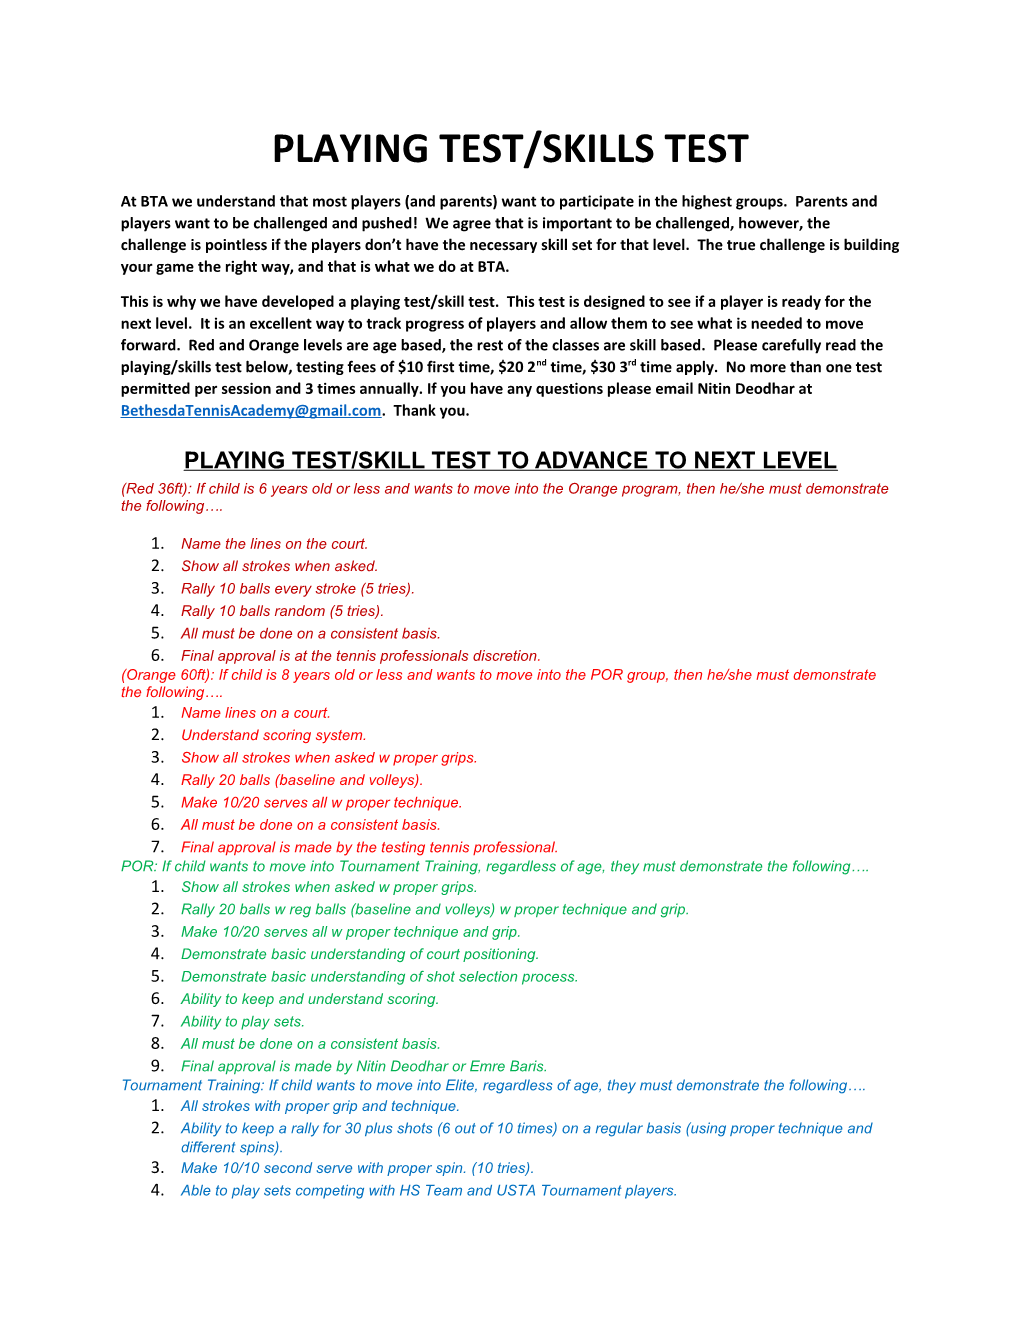 Playing Test/Skills Test